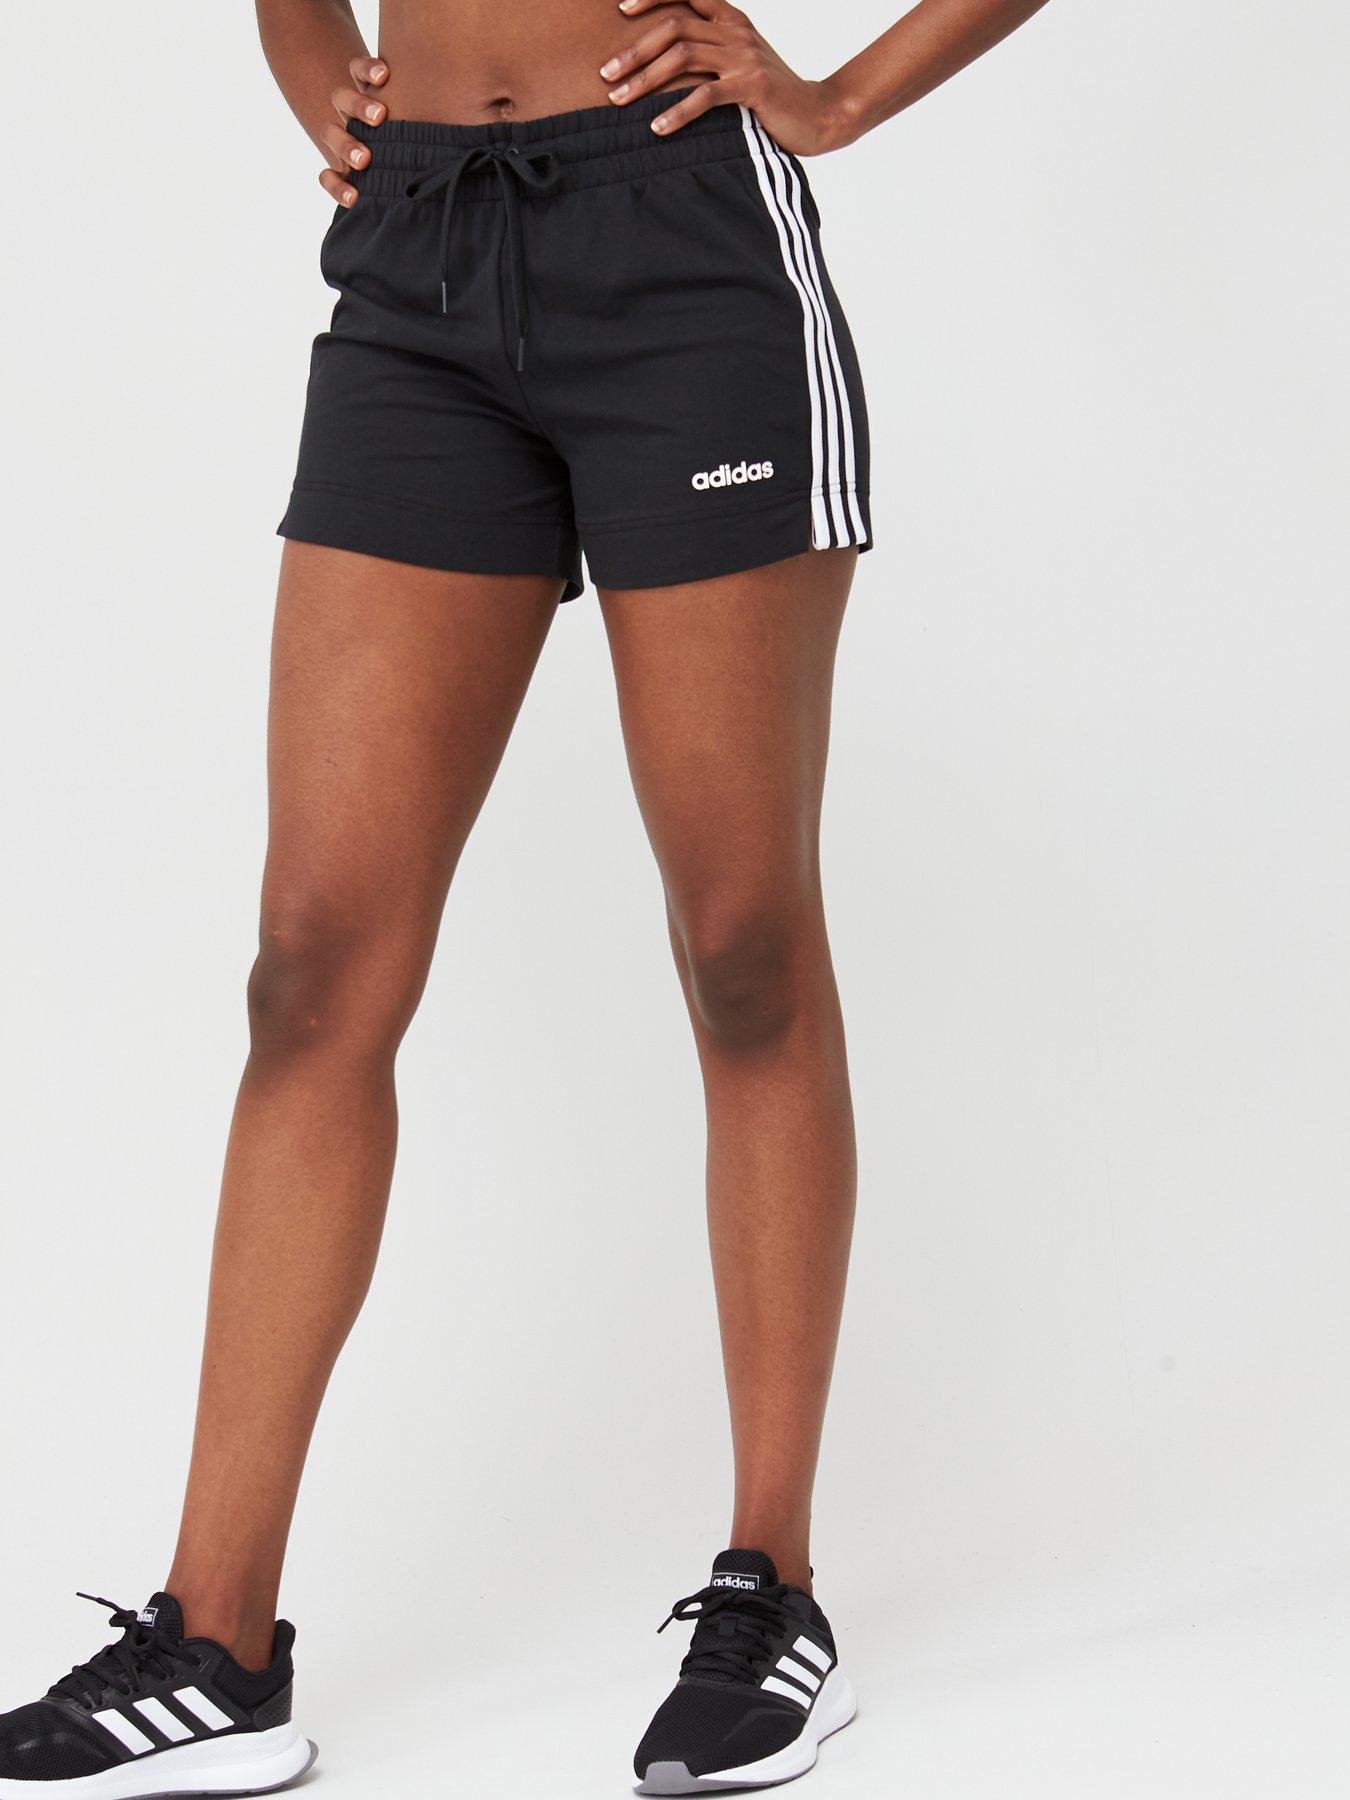 womens black adidas shorts